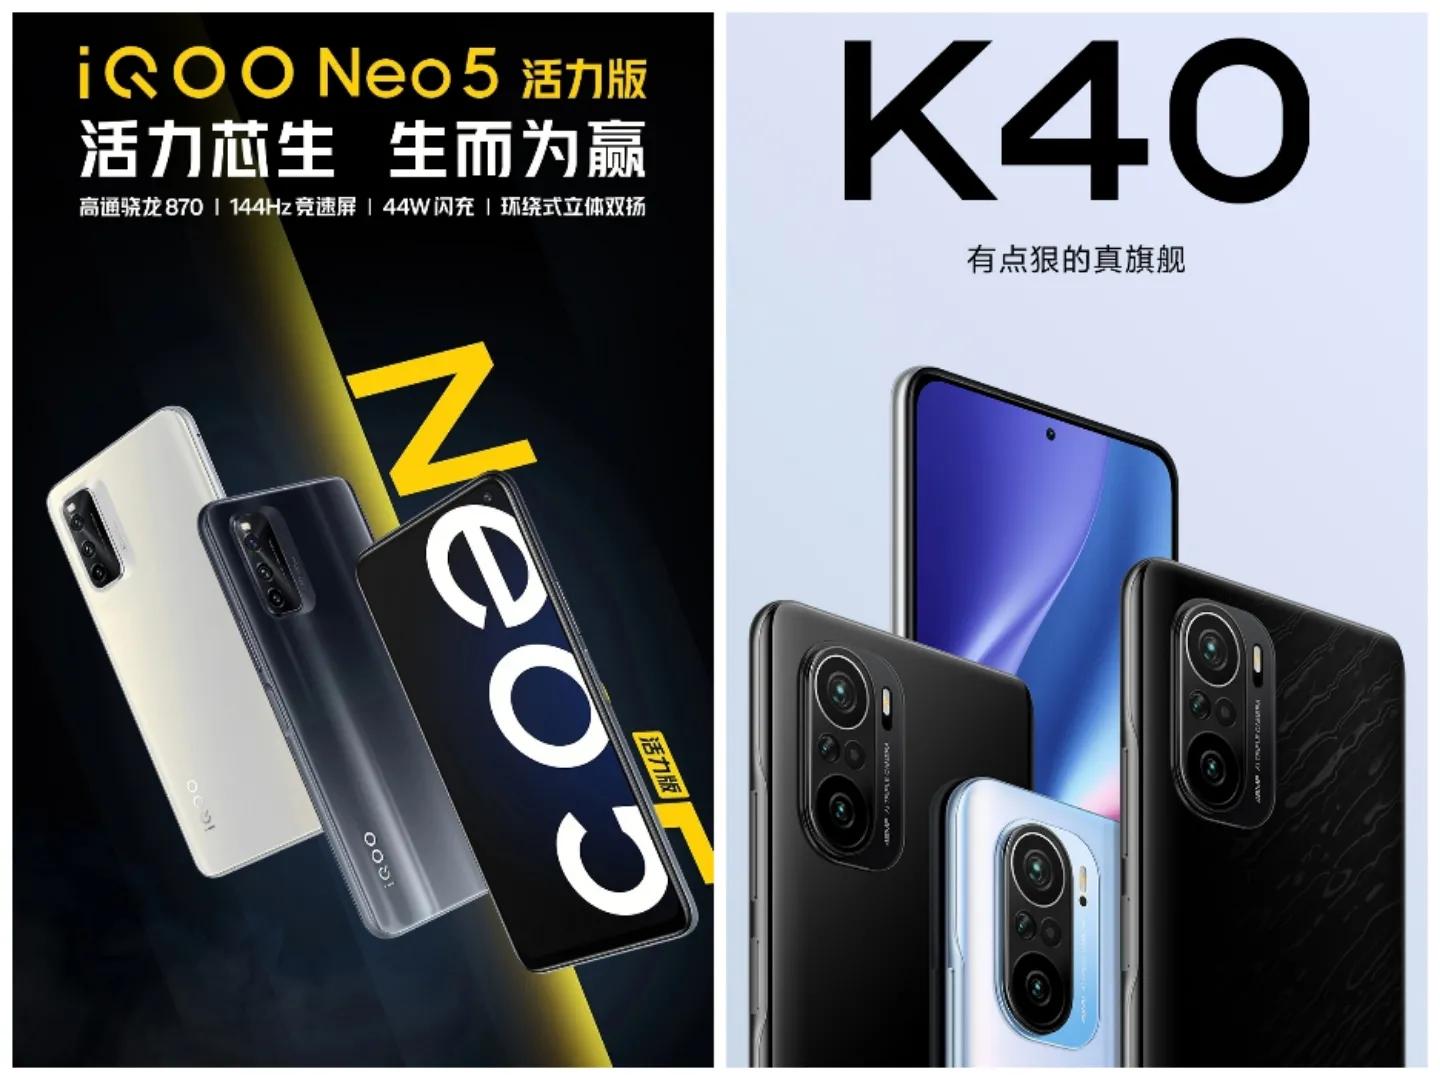 neo5活力版屏幕很差 IQOO NEO 5活力版对比红米K40，主要差别就是在屏幕上